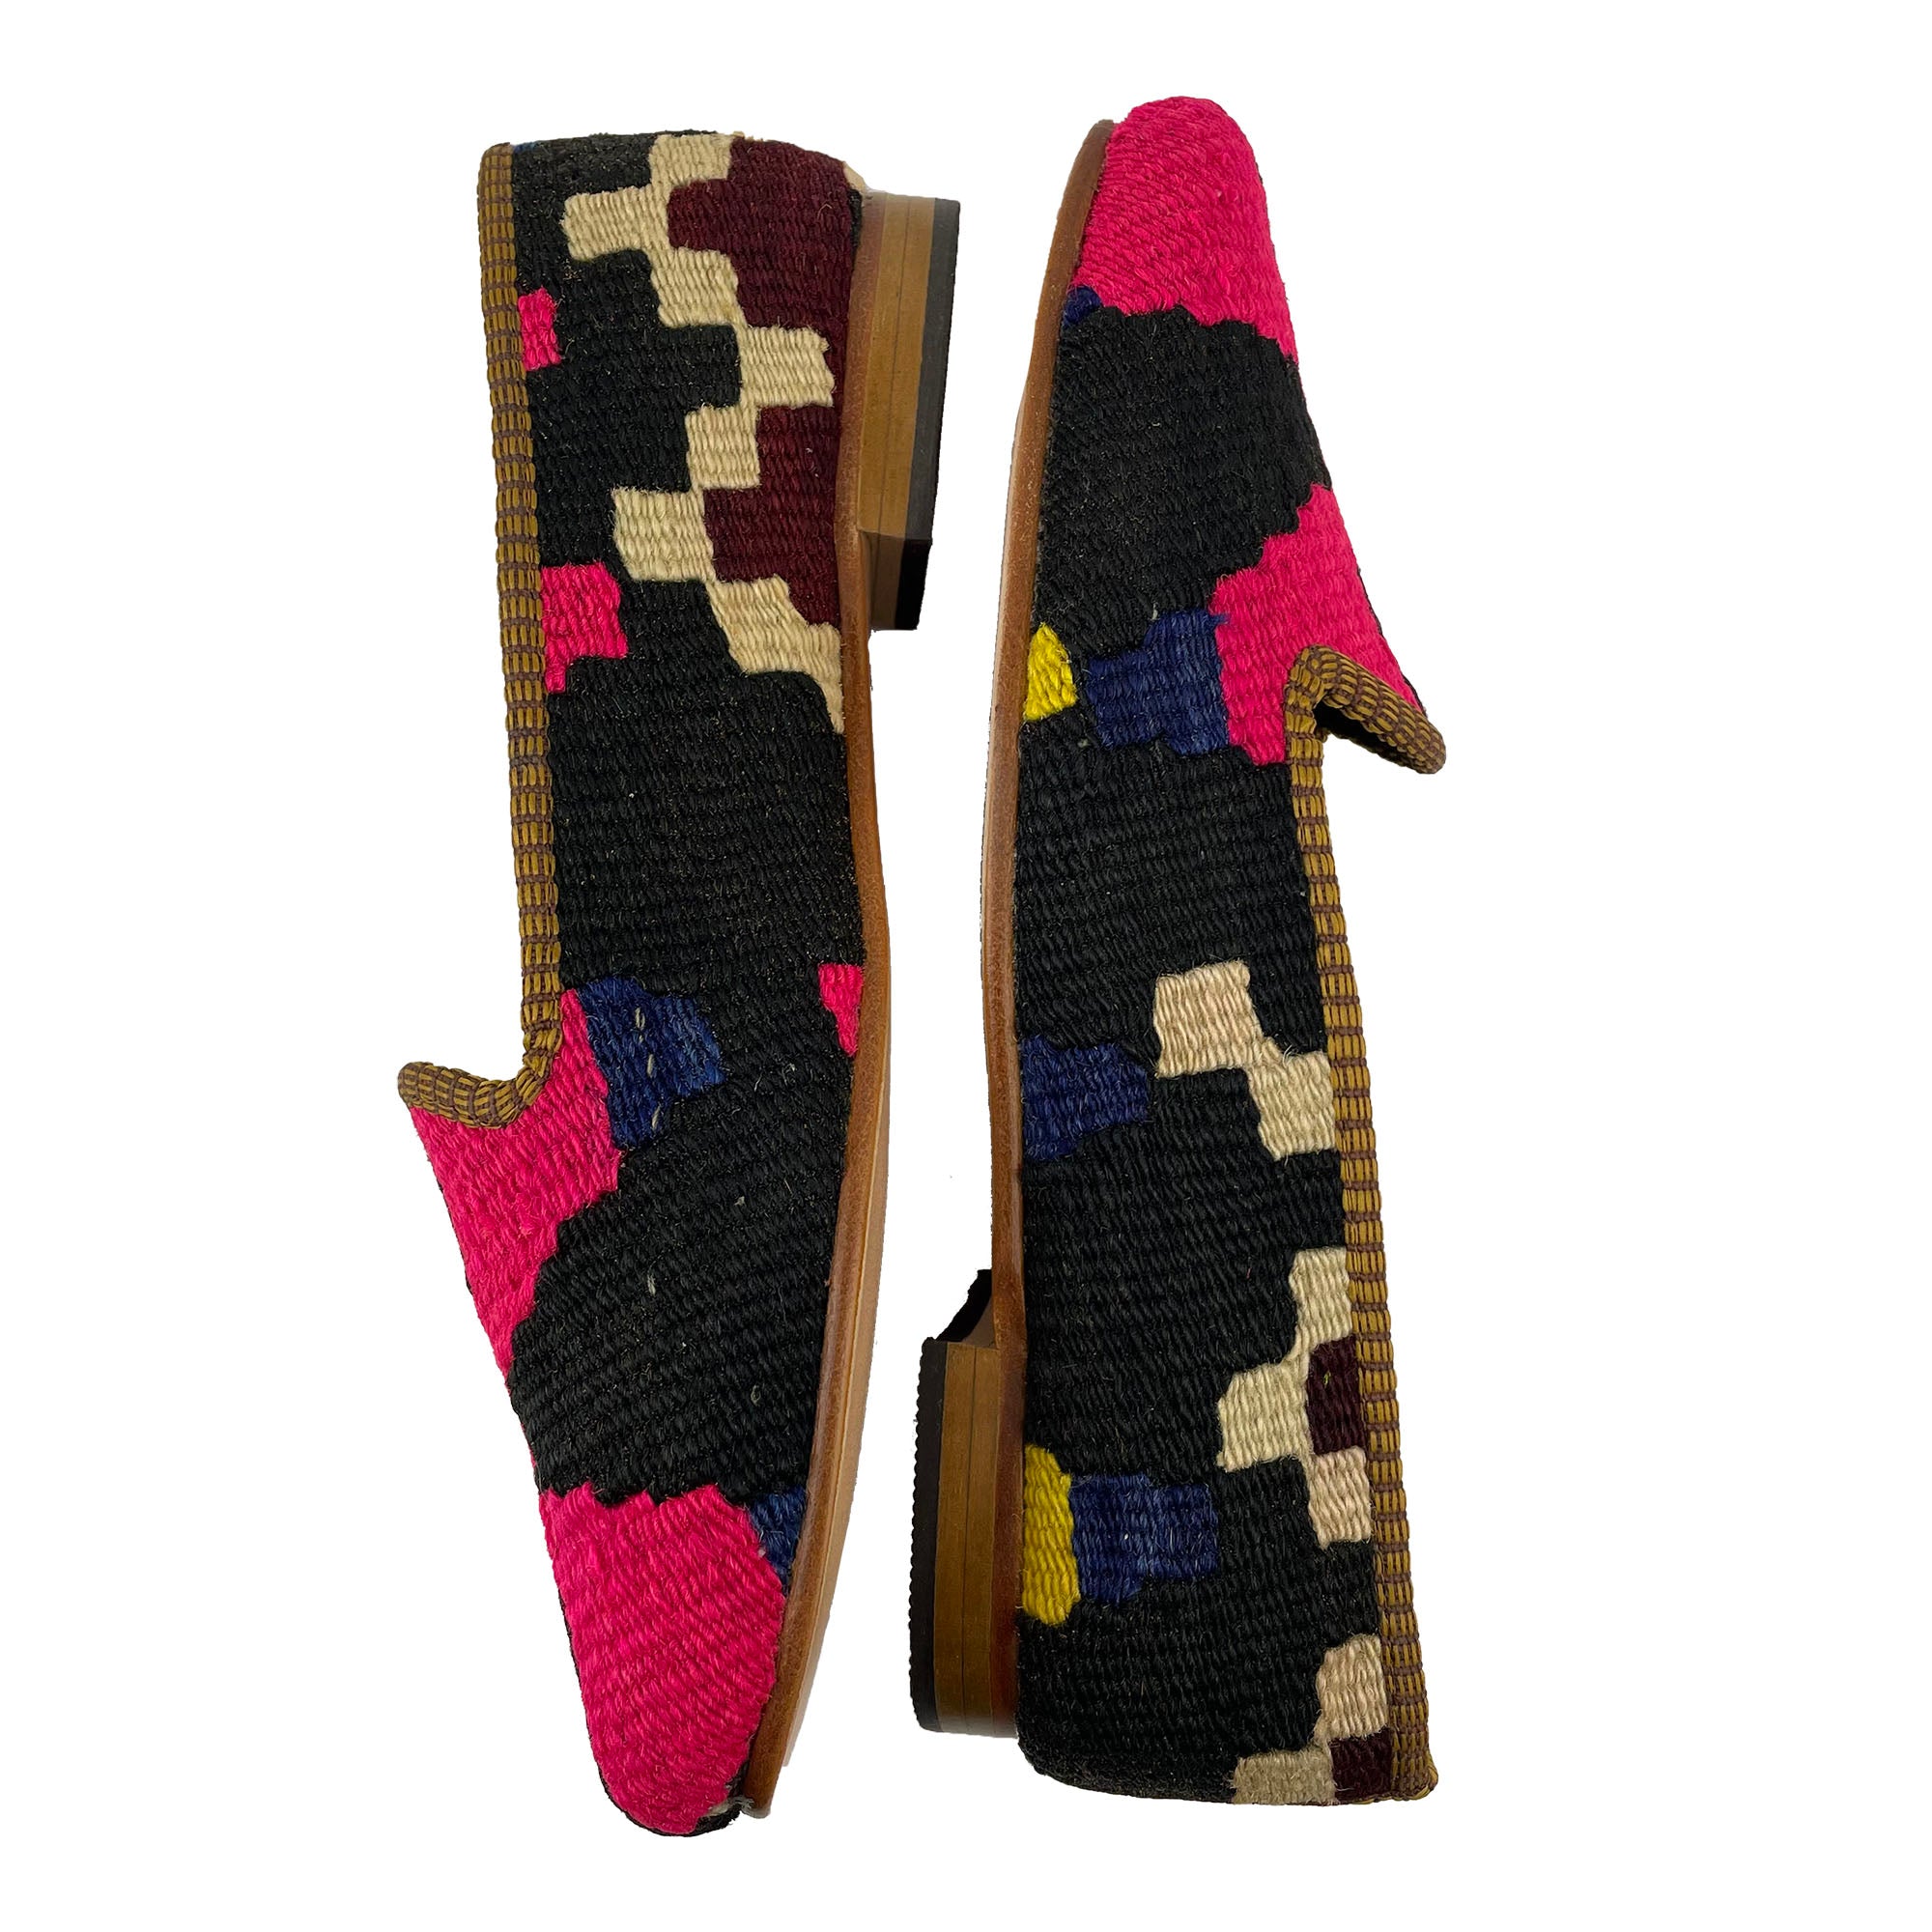 Aztec - UK 5 Ladies Kilim Shoe